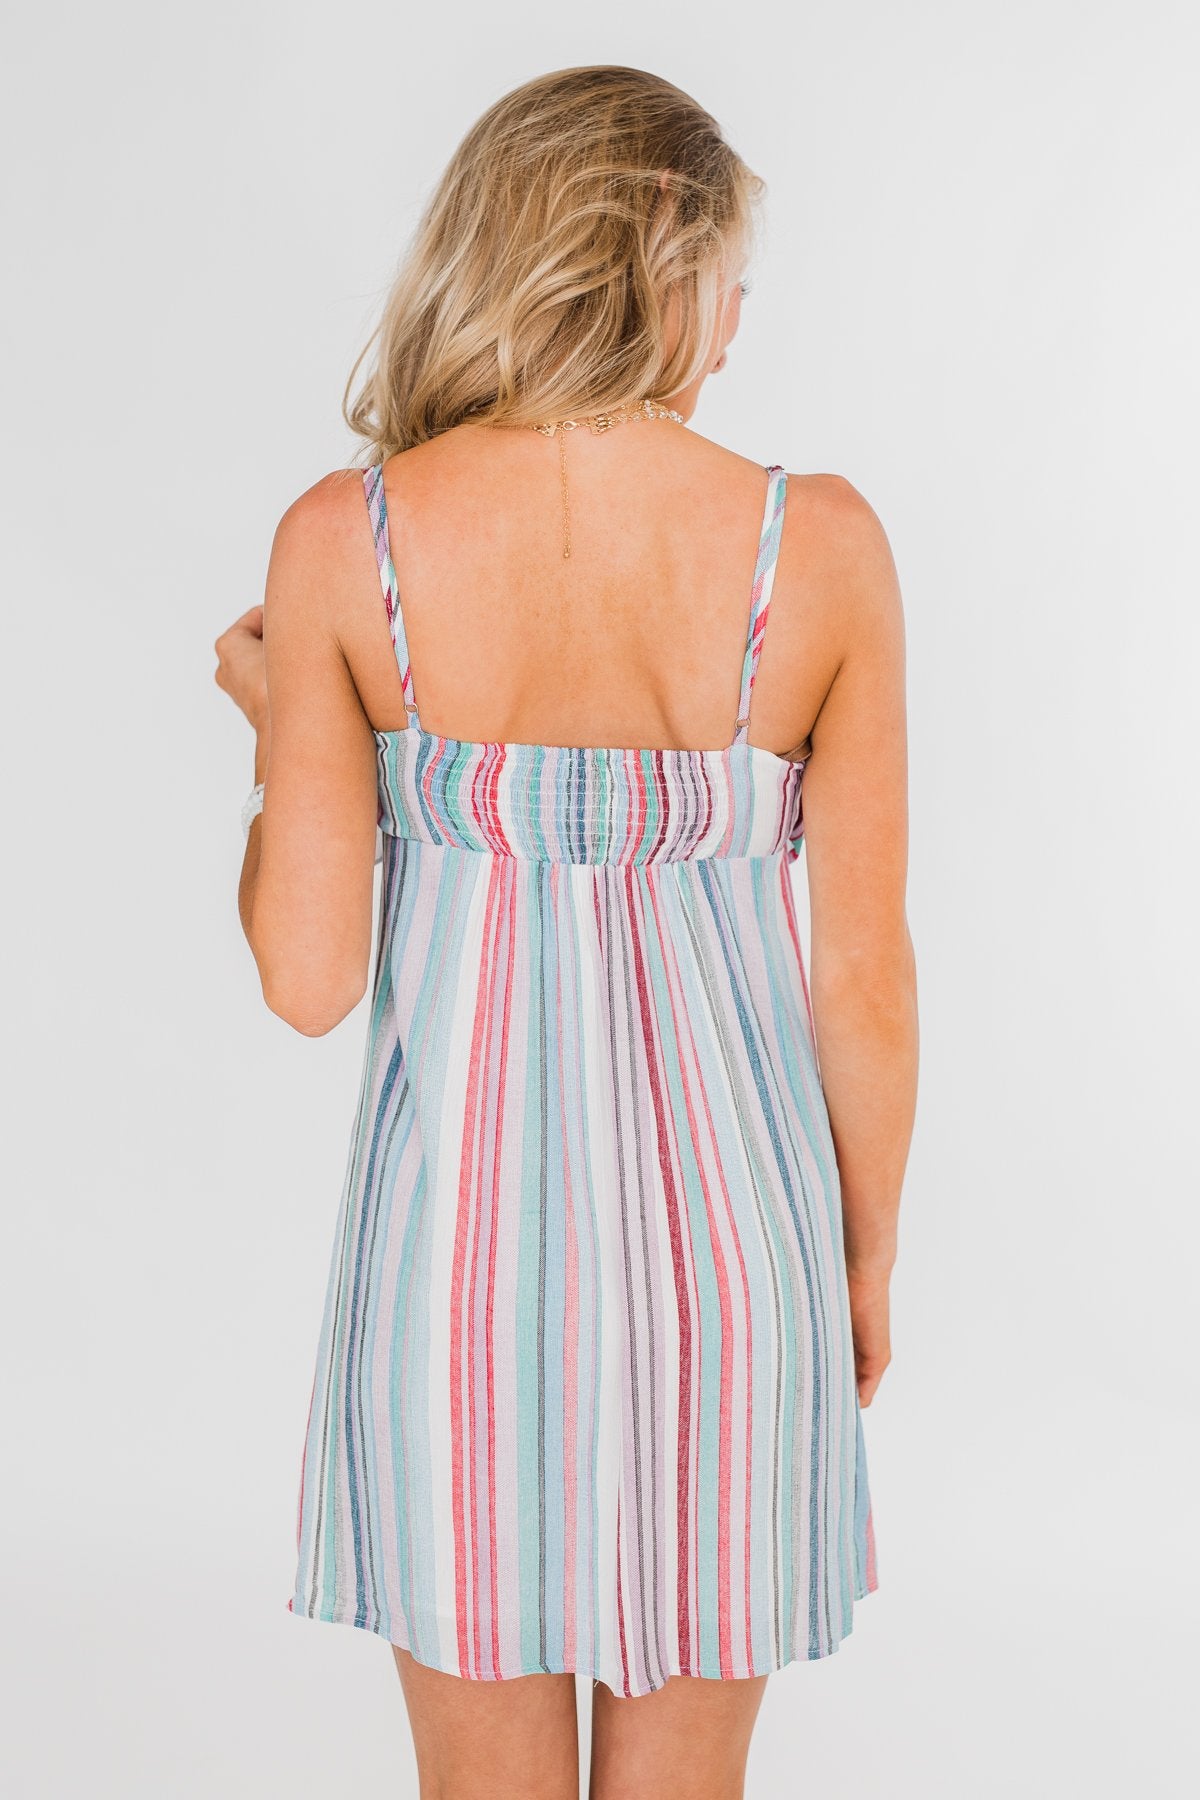 So Sweet Striped Dress- Multi Colored